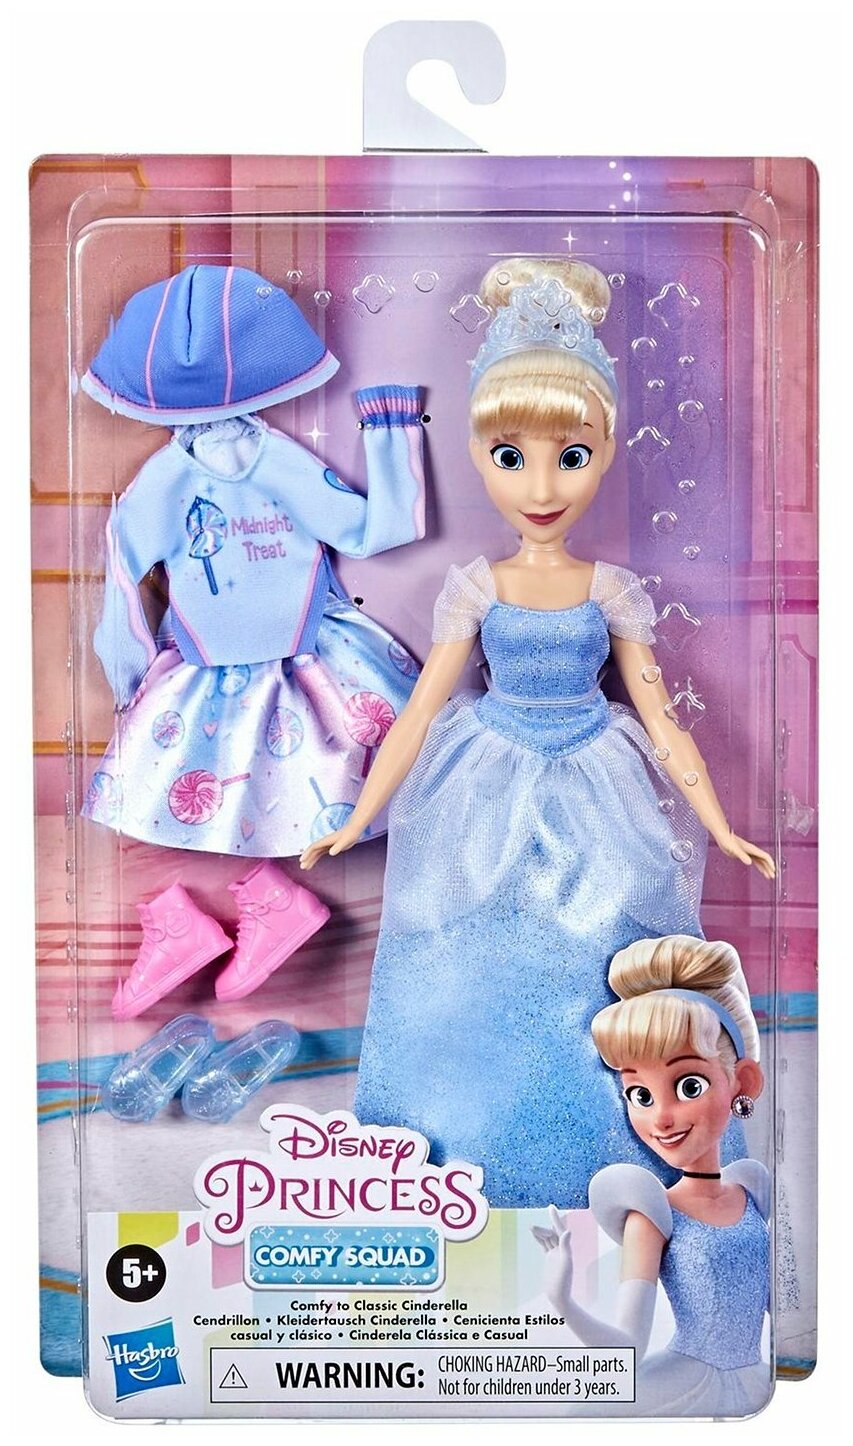 Disney Princess Кукла Hasbro Комфи Золушка 2наряда F2365/F1063